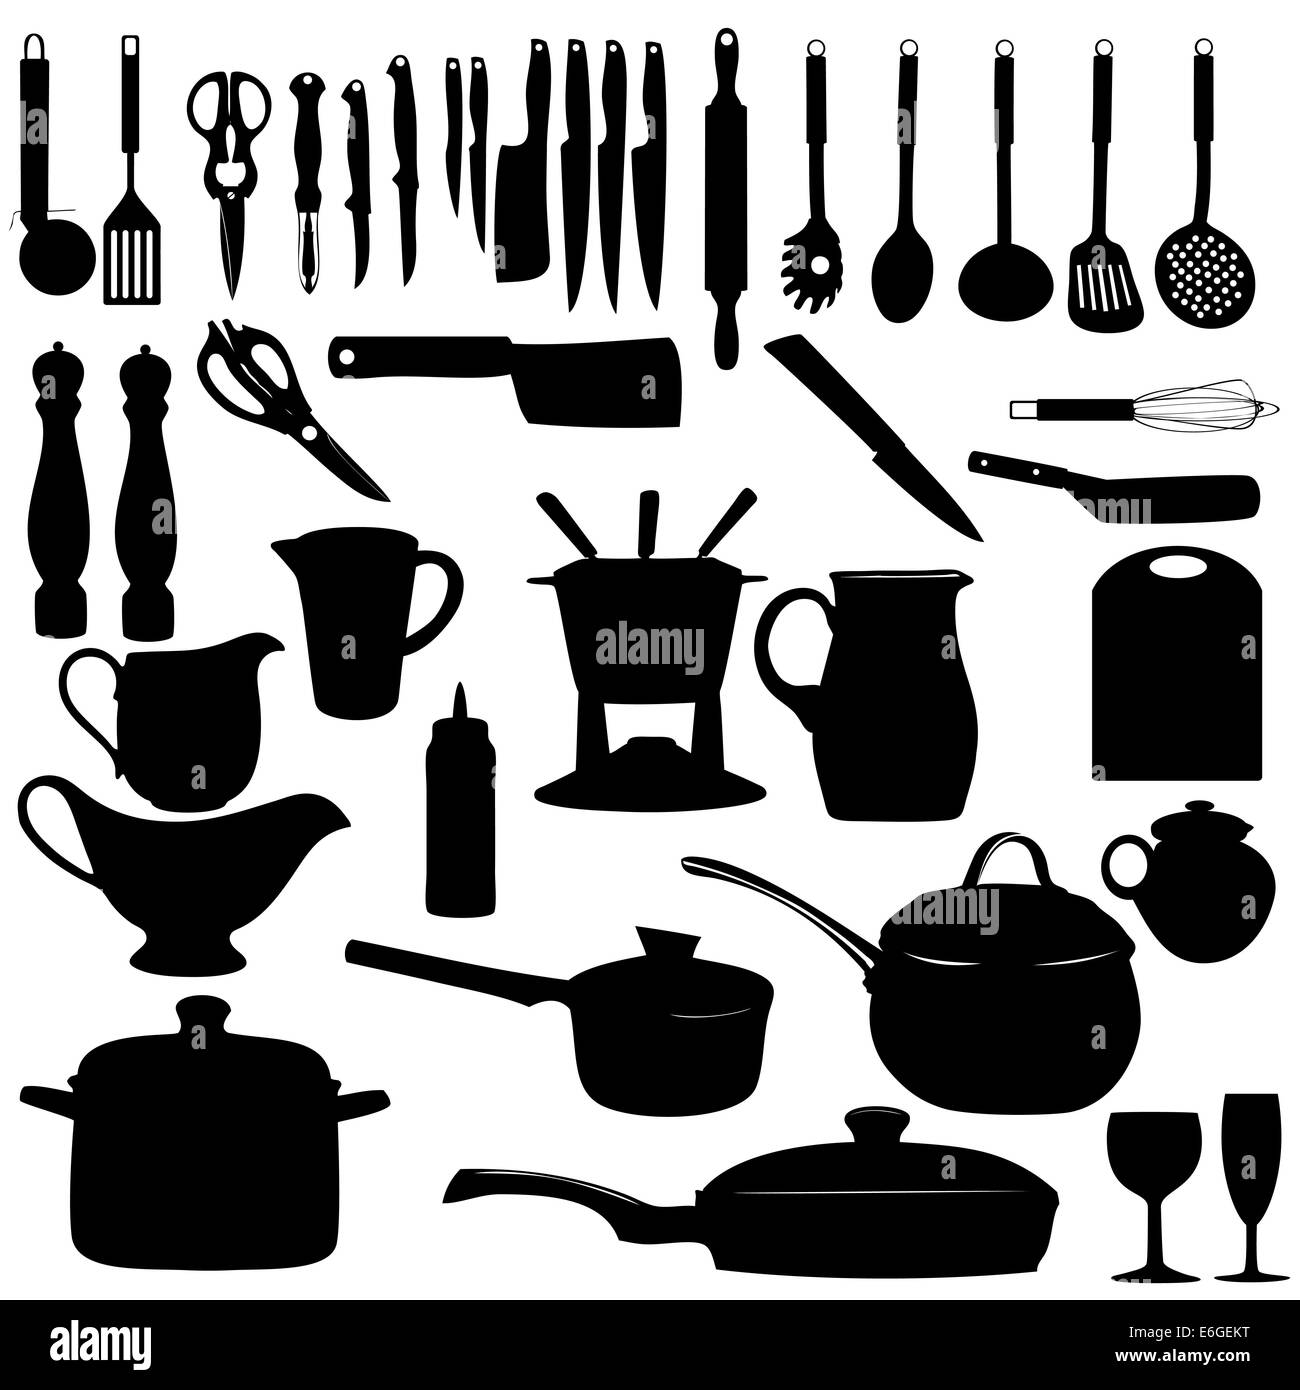 Kitchen tools Silhouette Vector illustration Stock Photo